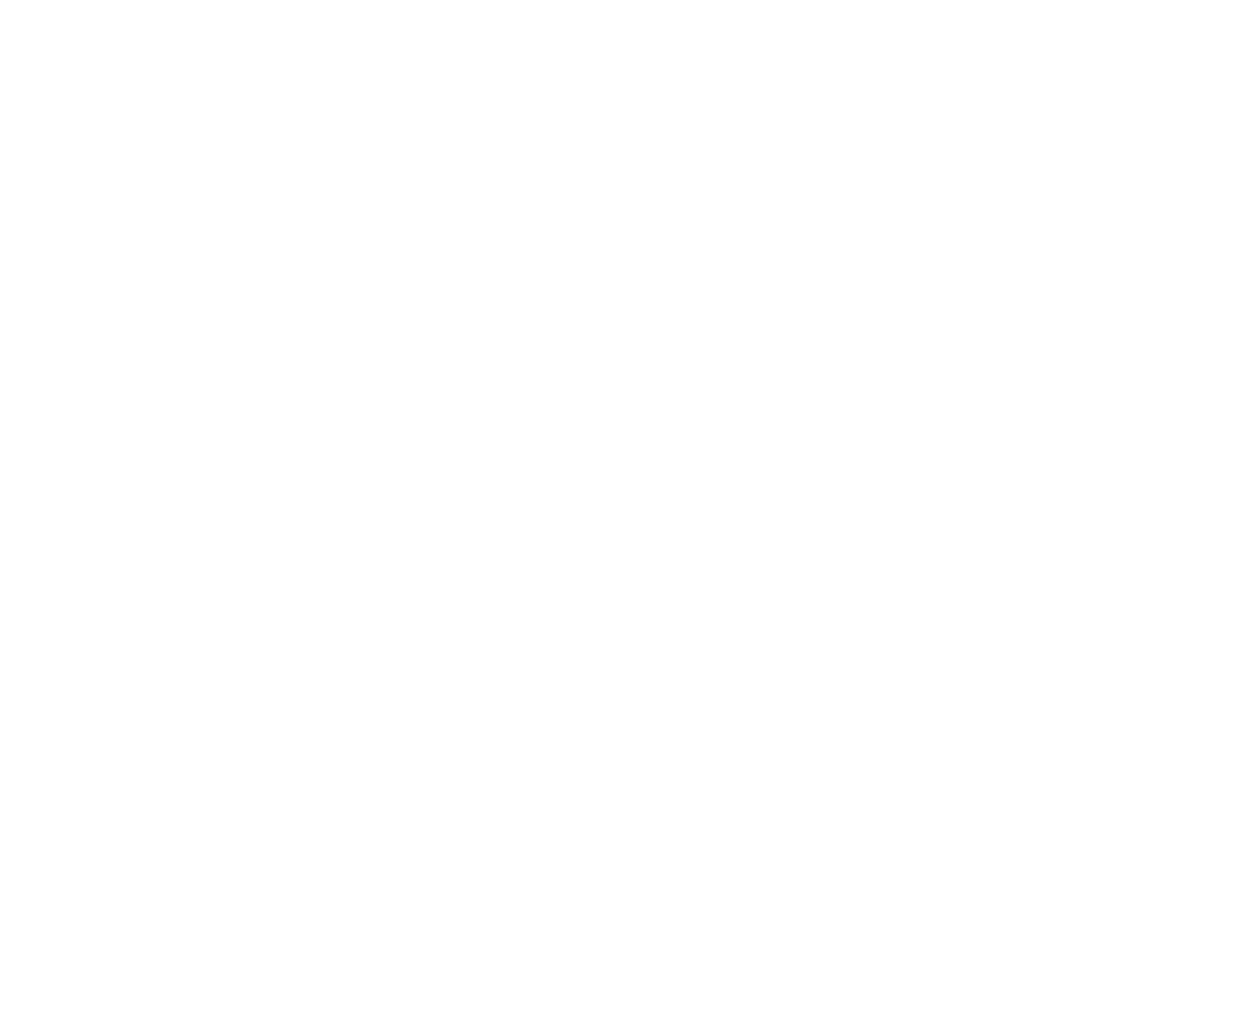 The top 10 per language